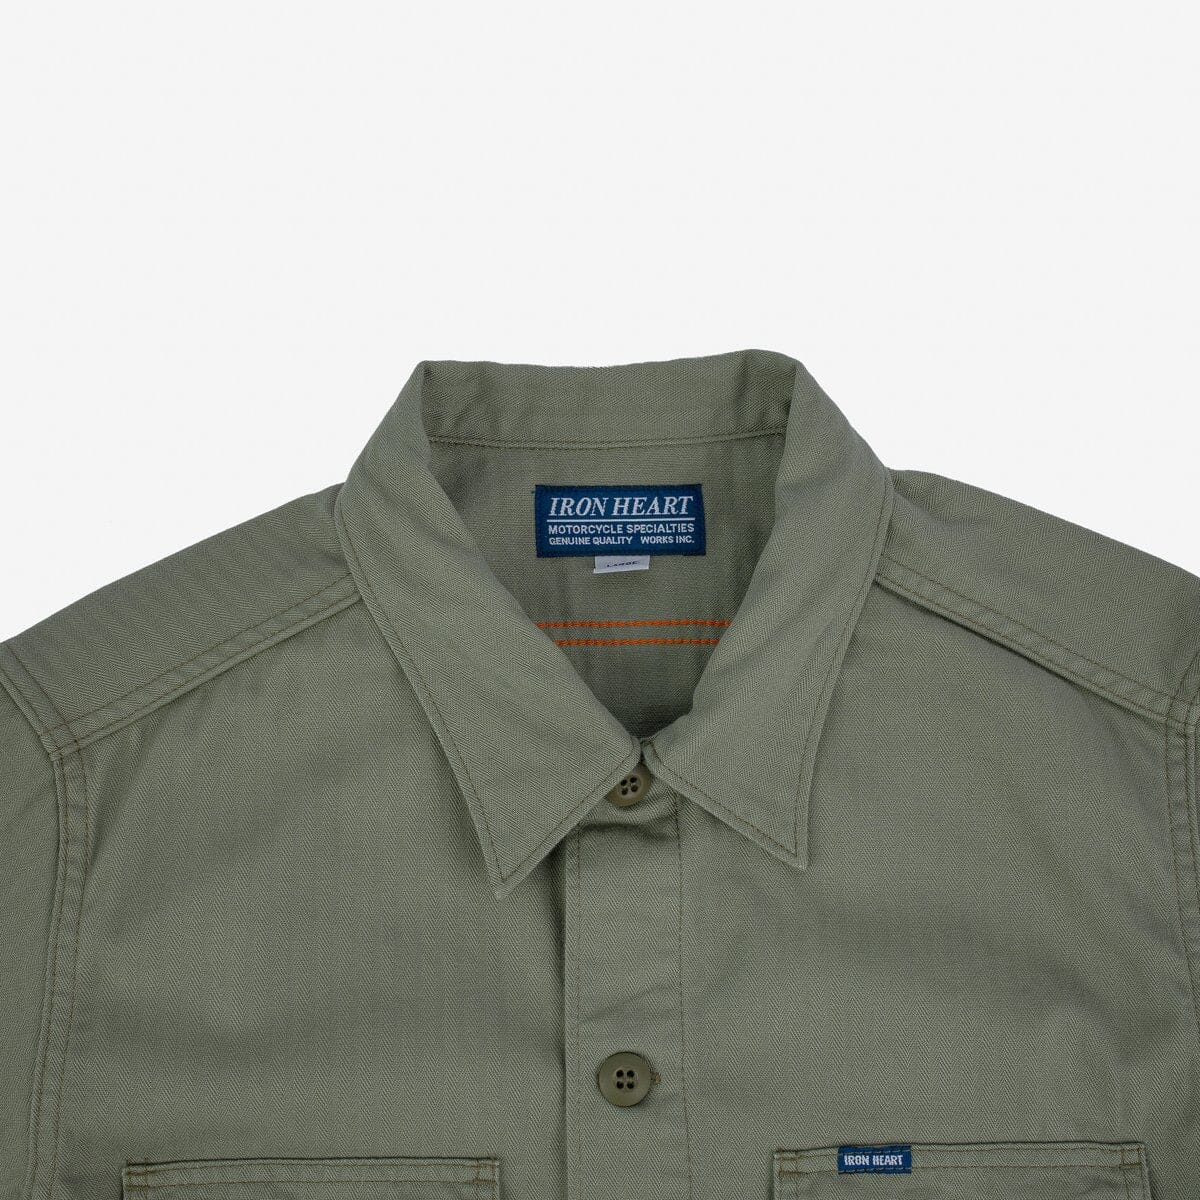 Iron Heart - IHSH-385-ODG - 9oz Herringbone Military Shirt - Olive Drab Green - City Workshop Men's Supply Co.